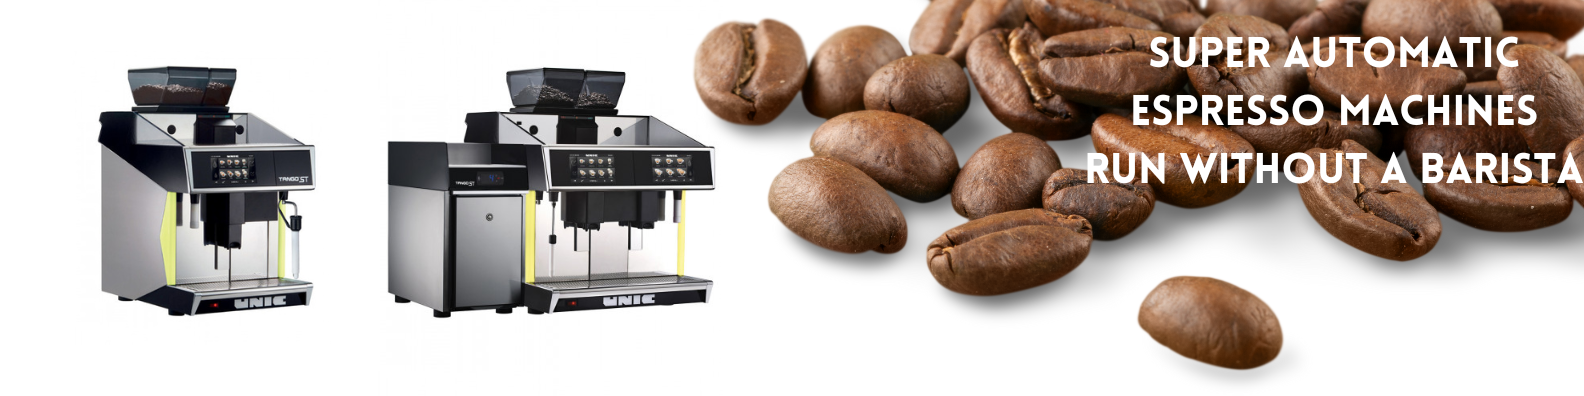 Super Automatic Espresso Machines Run Without a Barista